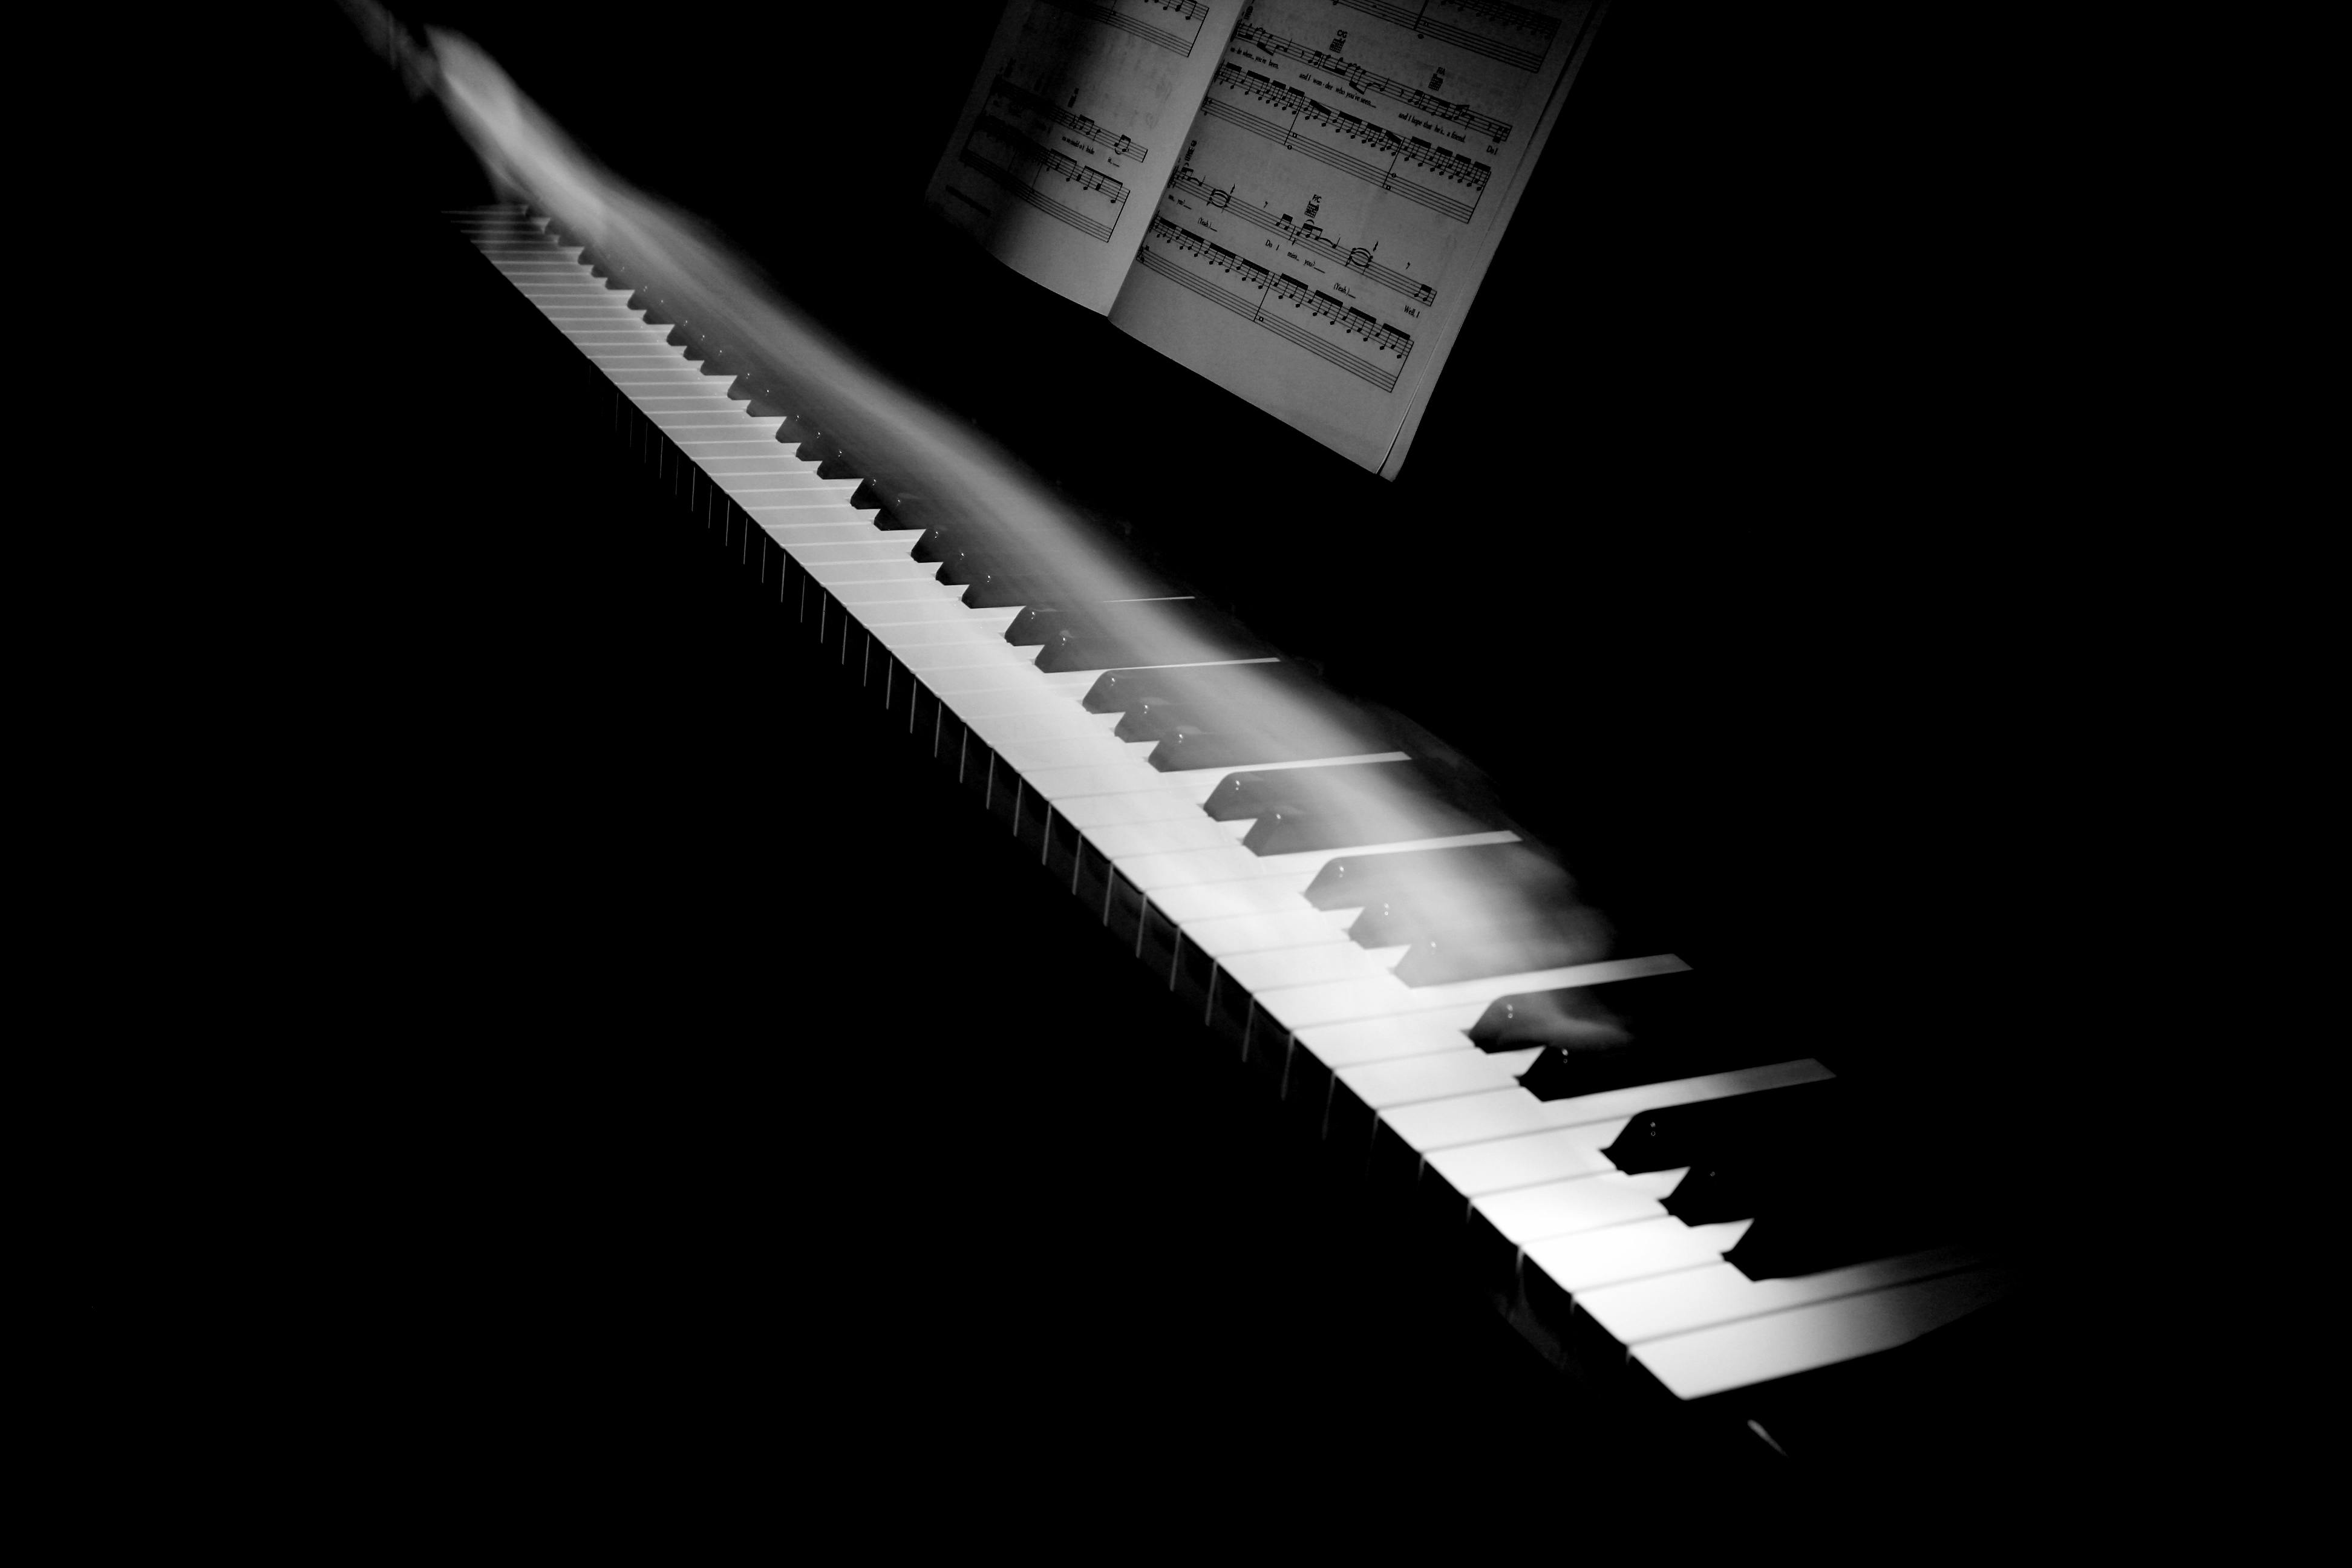 Piano keys | Source: Pexels